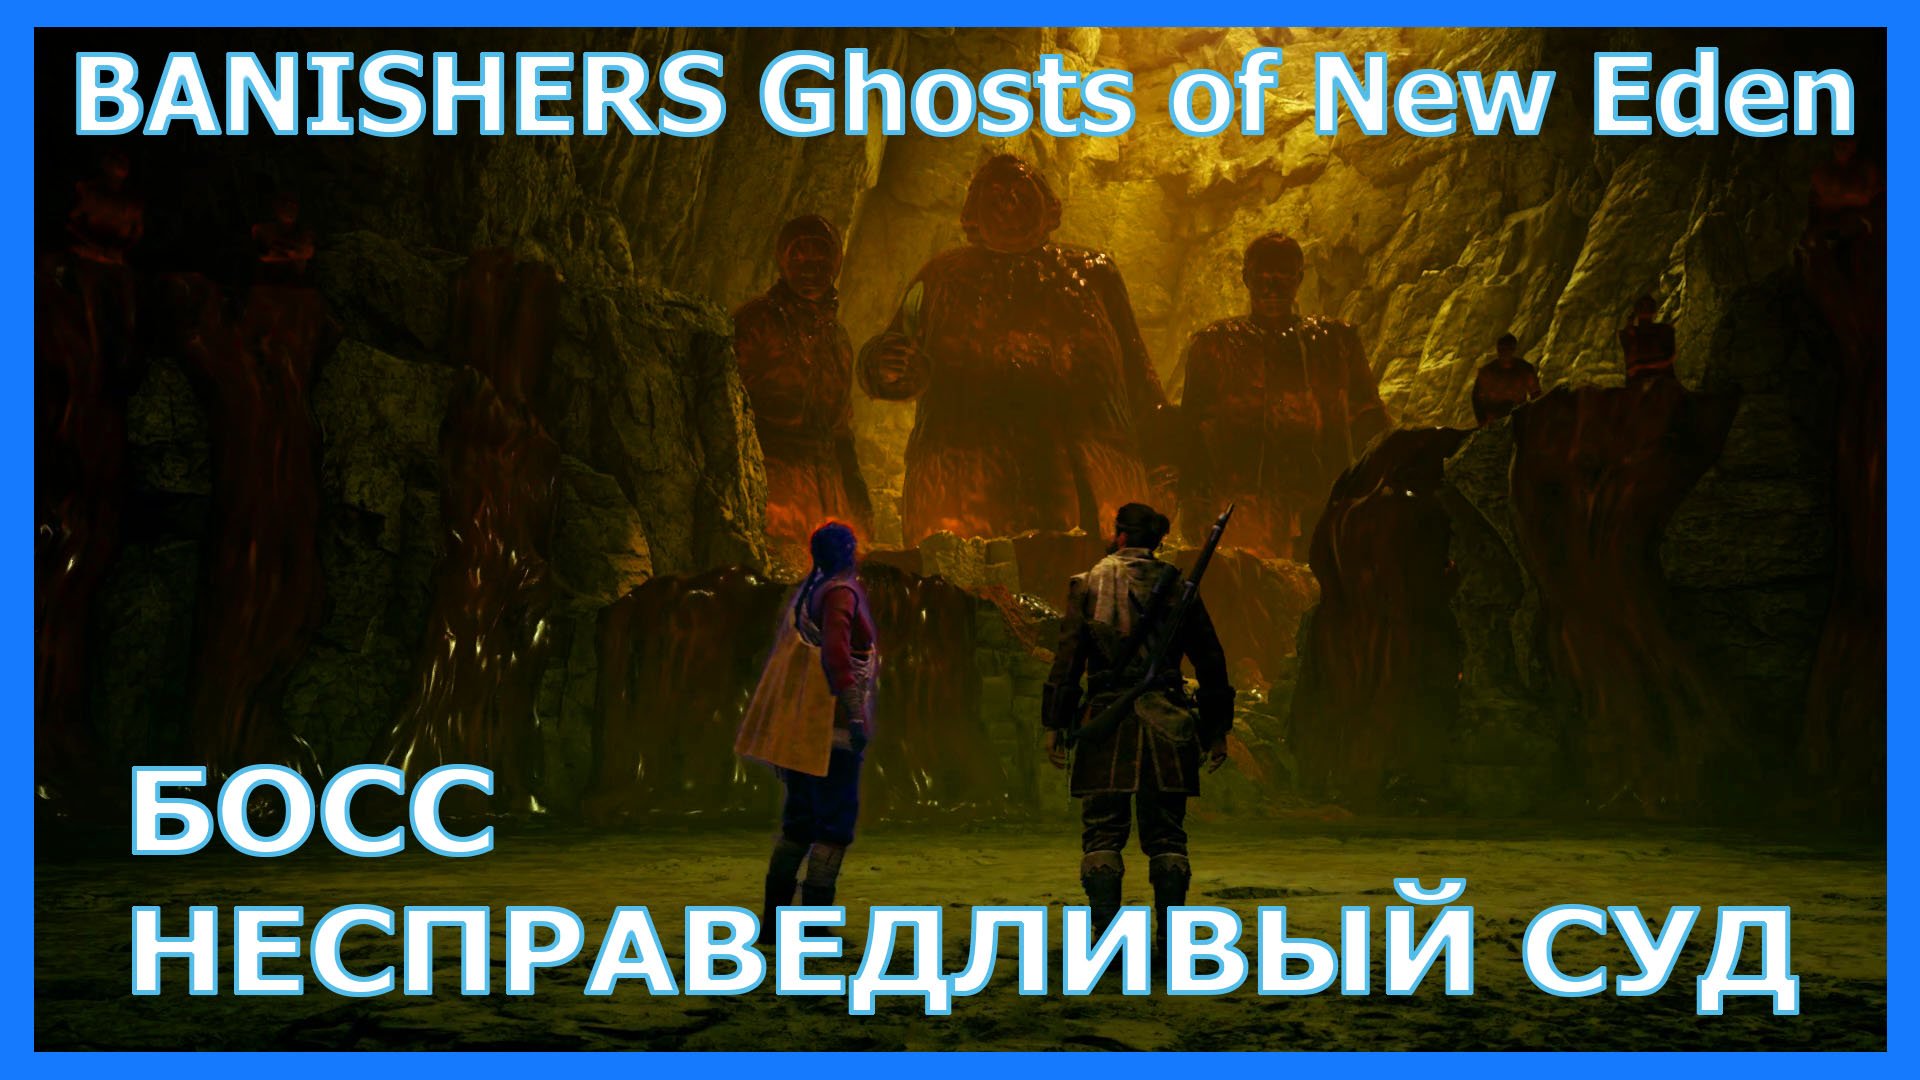 BANISHERS Ghosts of New Eden БОСС НЕСПРАВЕДЛИВЫЙ СУД